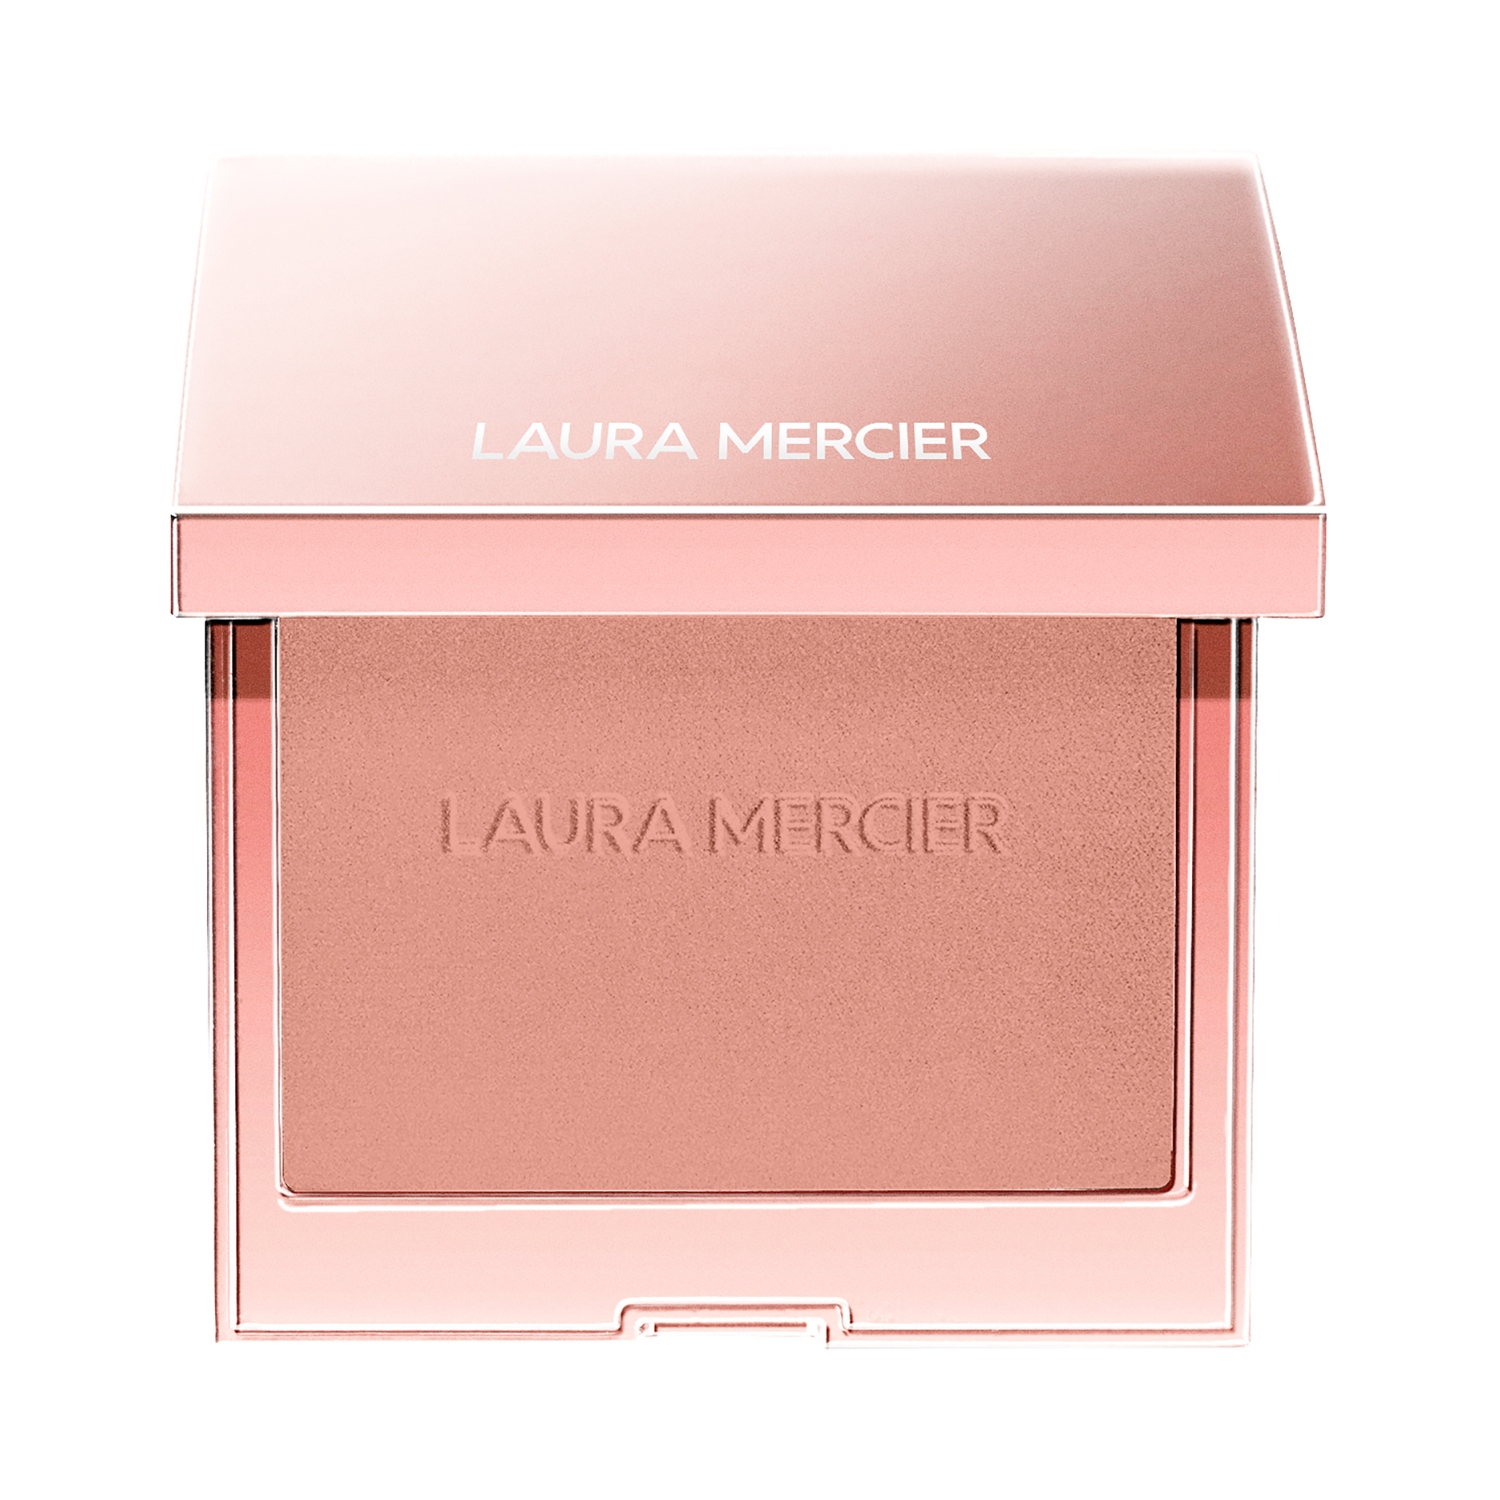 Laura Mercier | Laura Mercier Rose Glow Blush Color Infusion - All That Sparkles (6g)